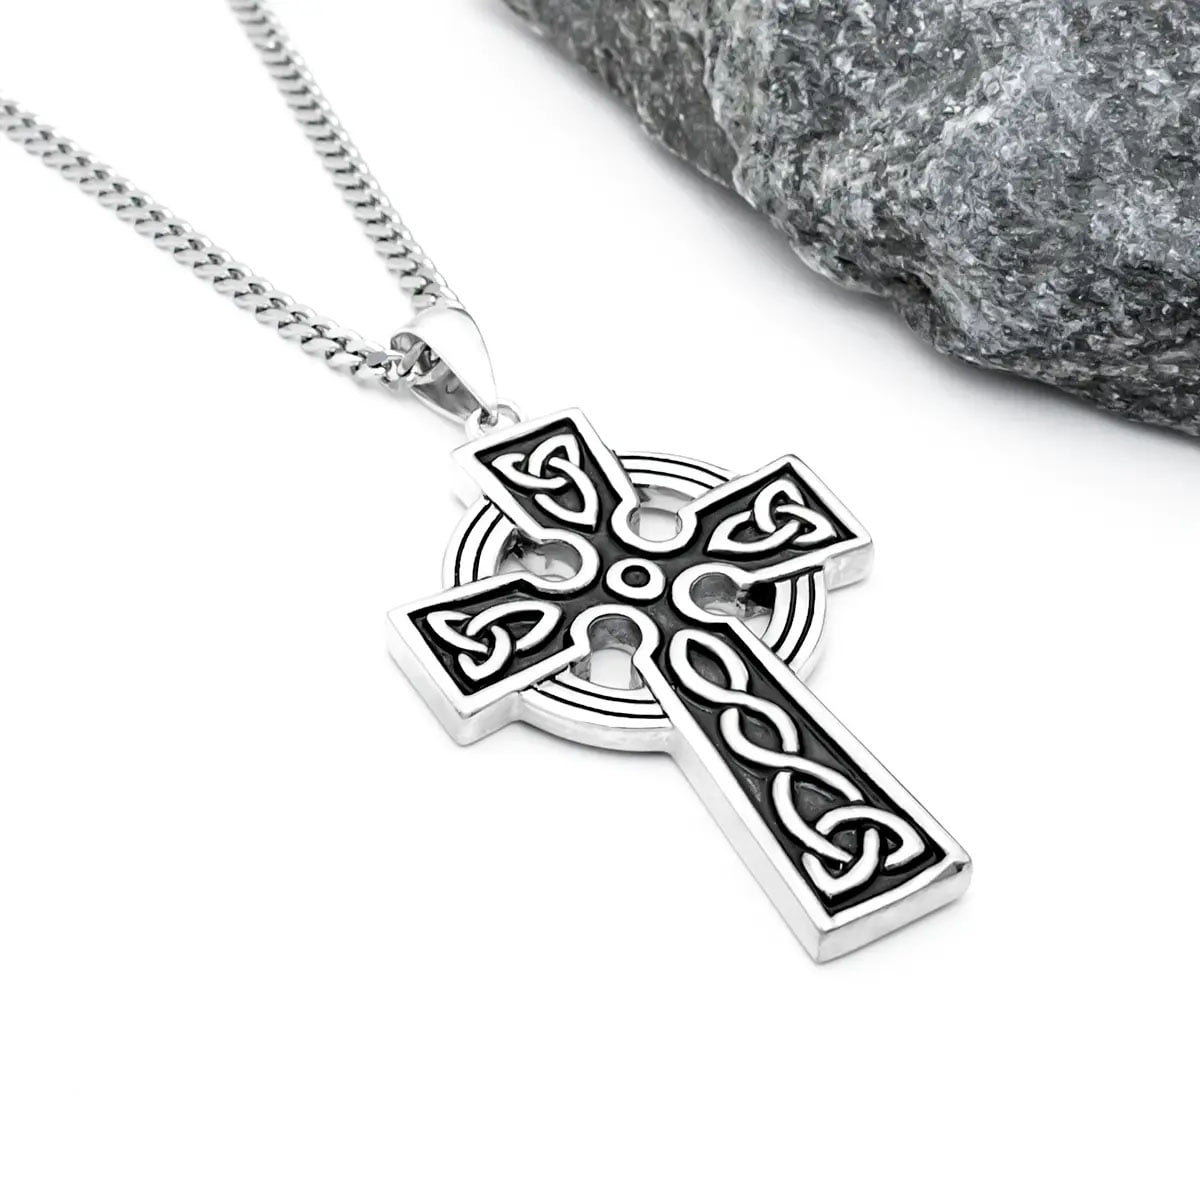 Captivating Celtic Cross Necklaces and Pendants: Embrace Your Irish ...